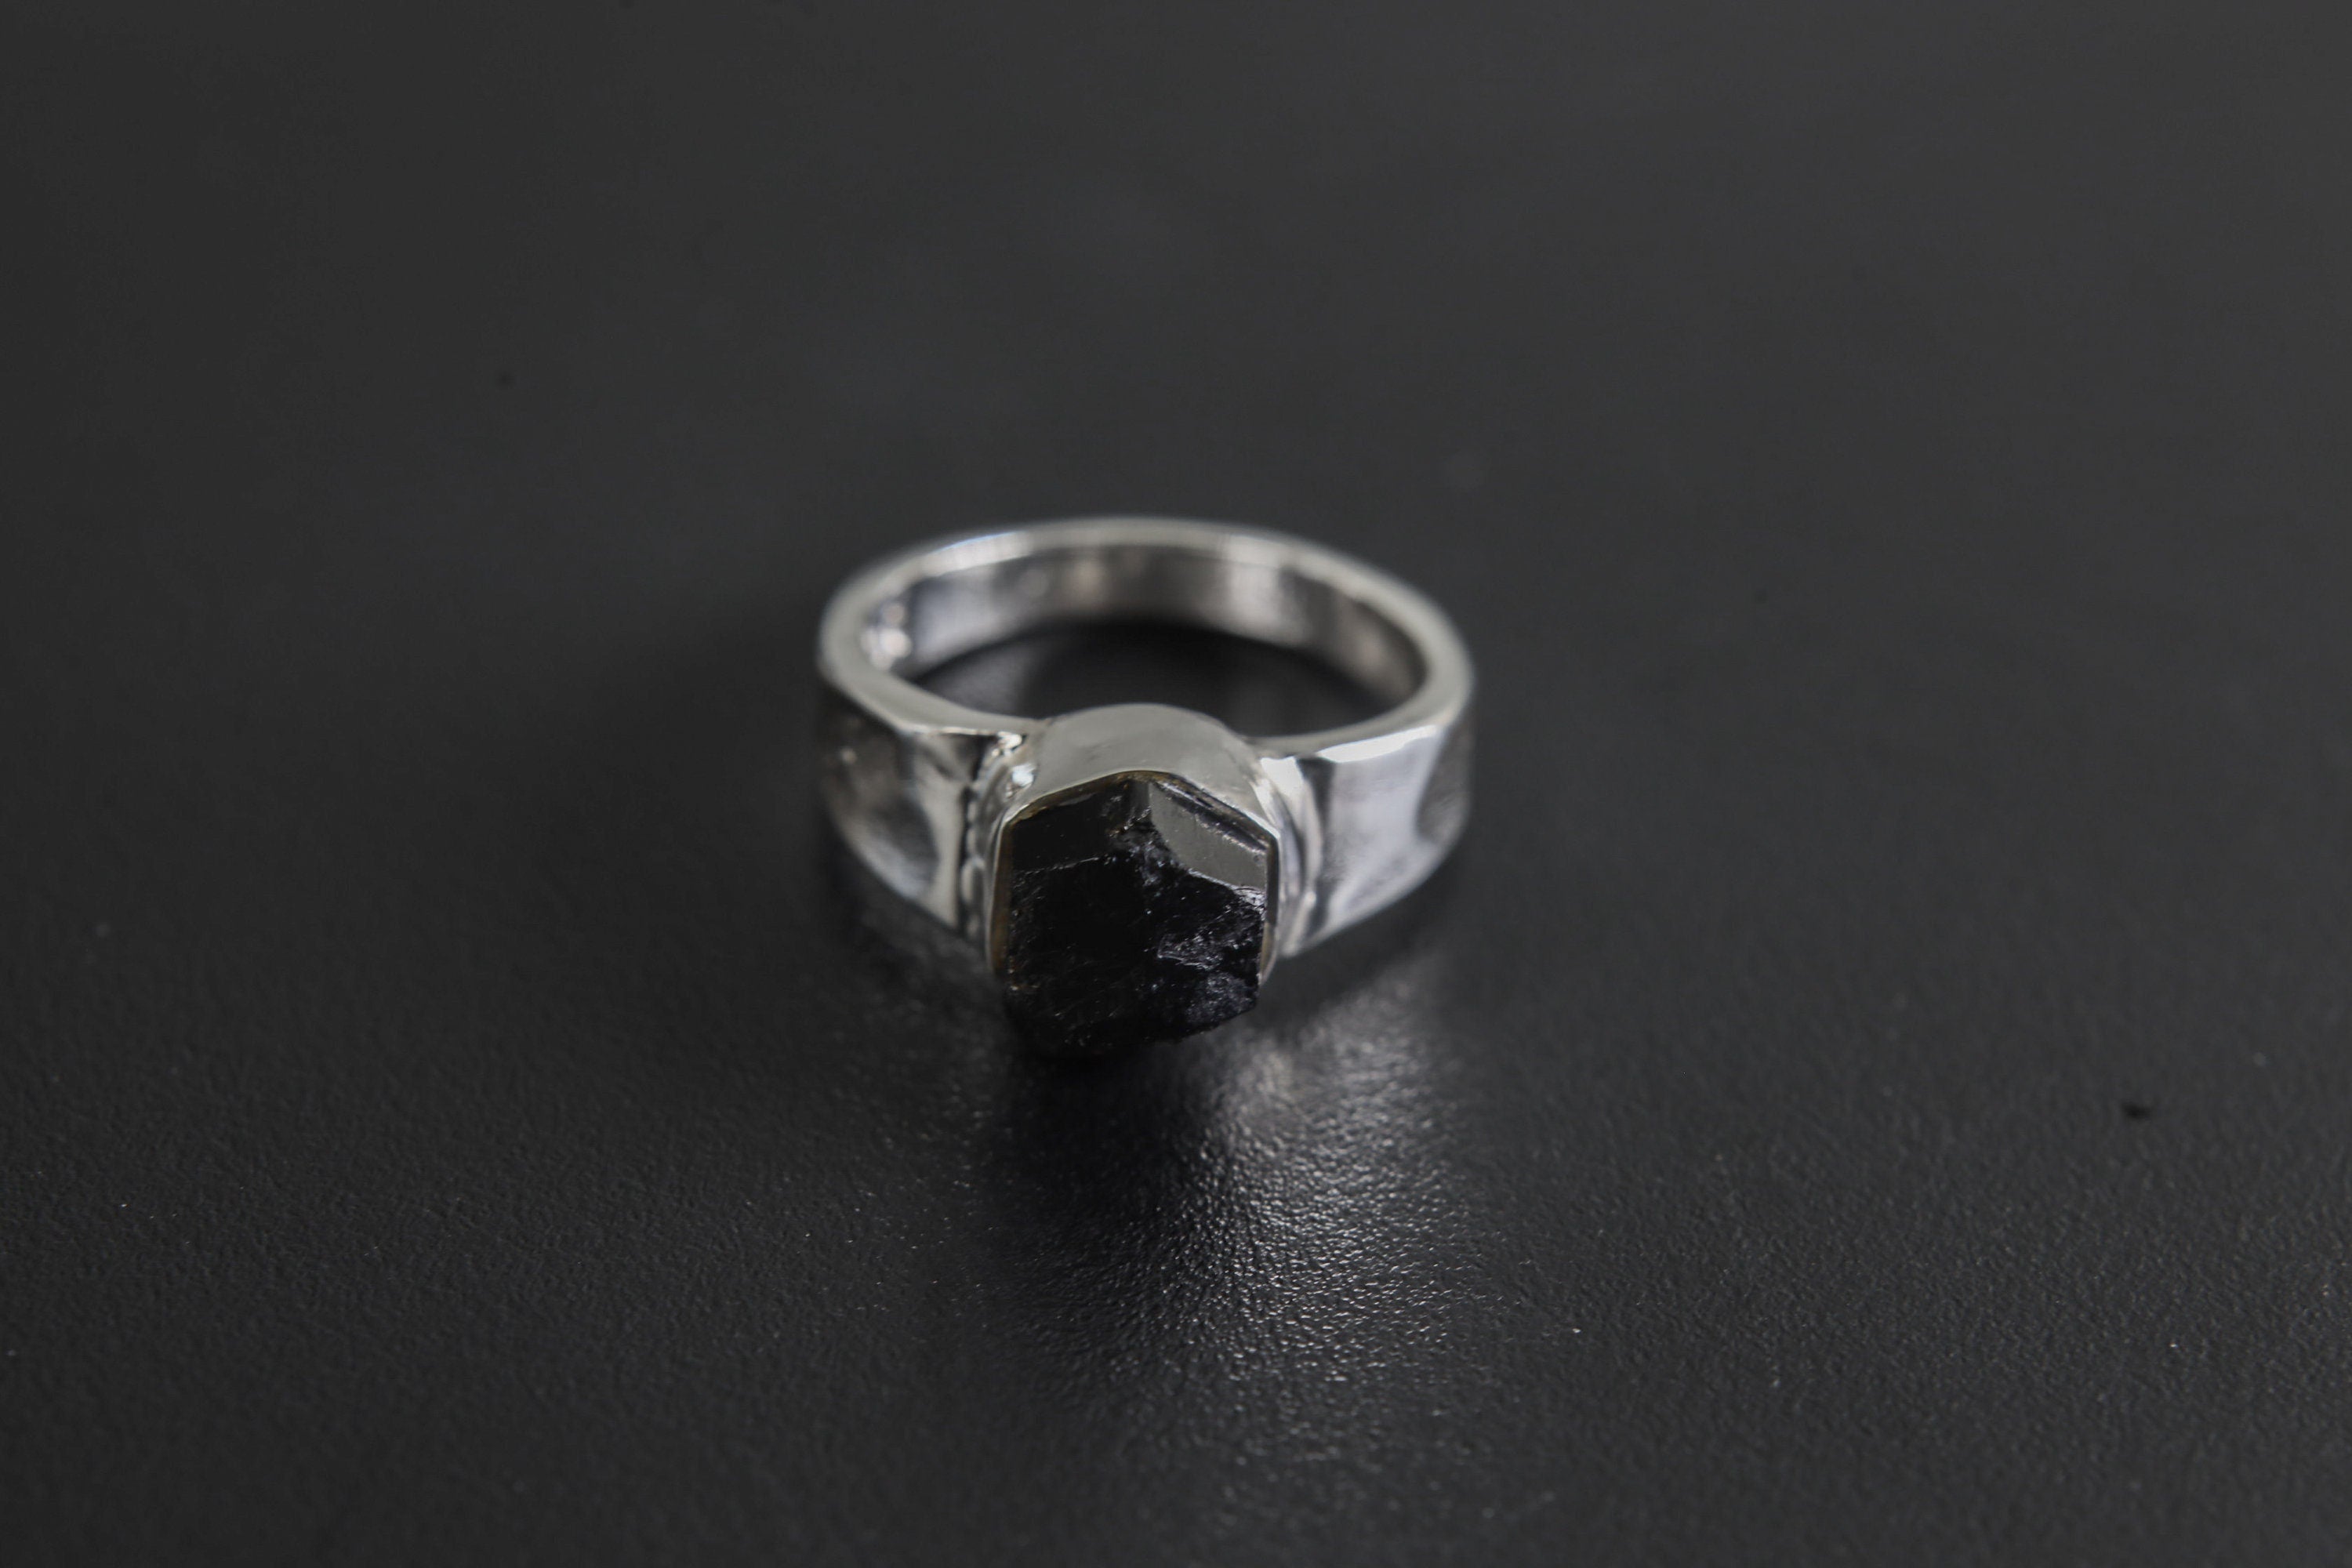 Black Tourmaline Ring - Hammered Band - 925 Sterling Silver Setting - Unisex - High Shine Polish - Size 6 US - NO/04